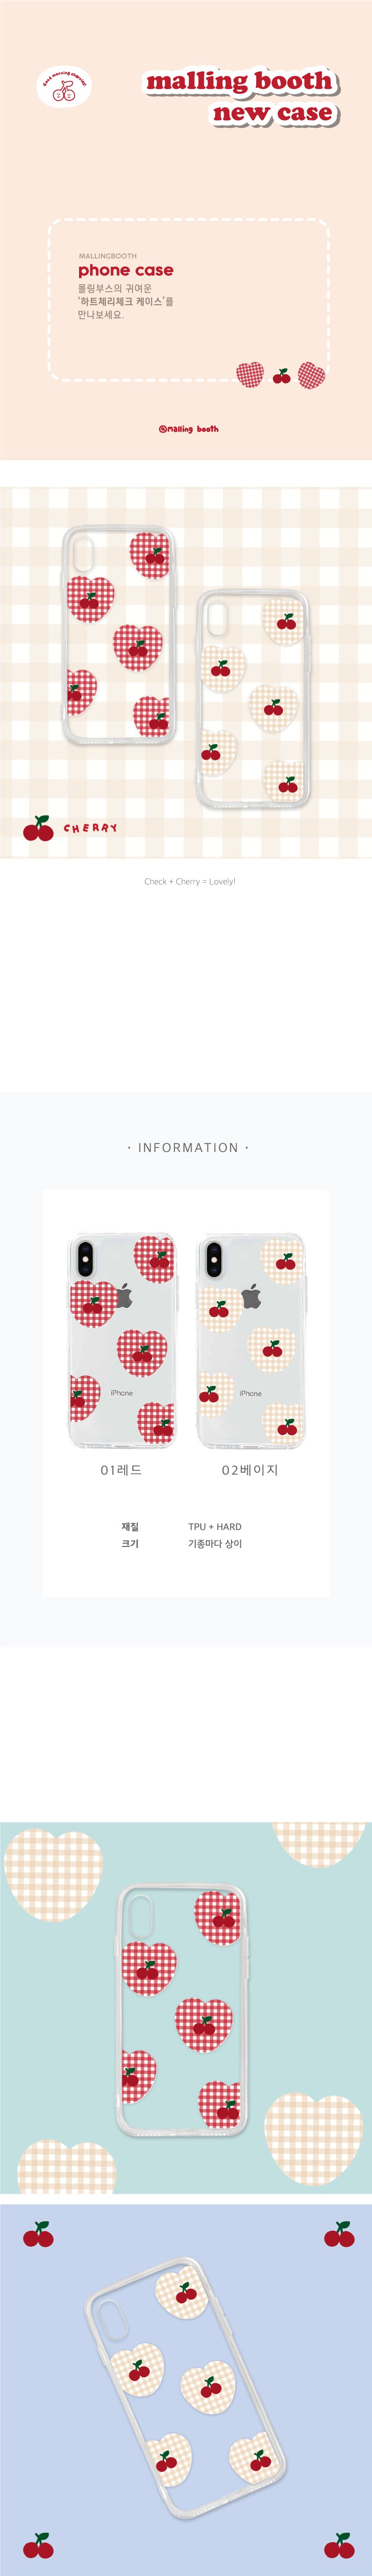 Heart cherry check smartphone case